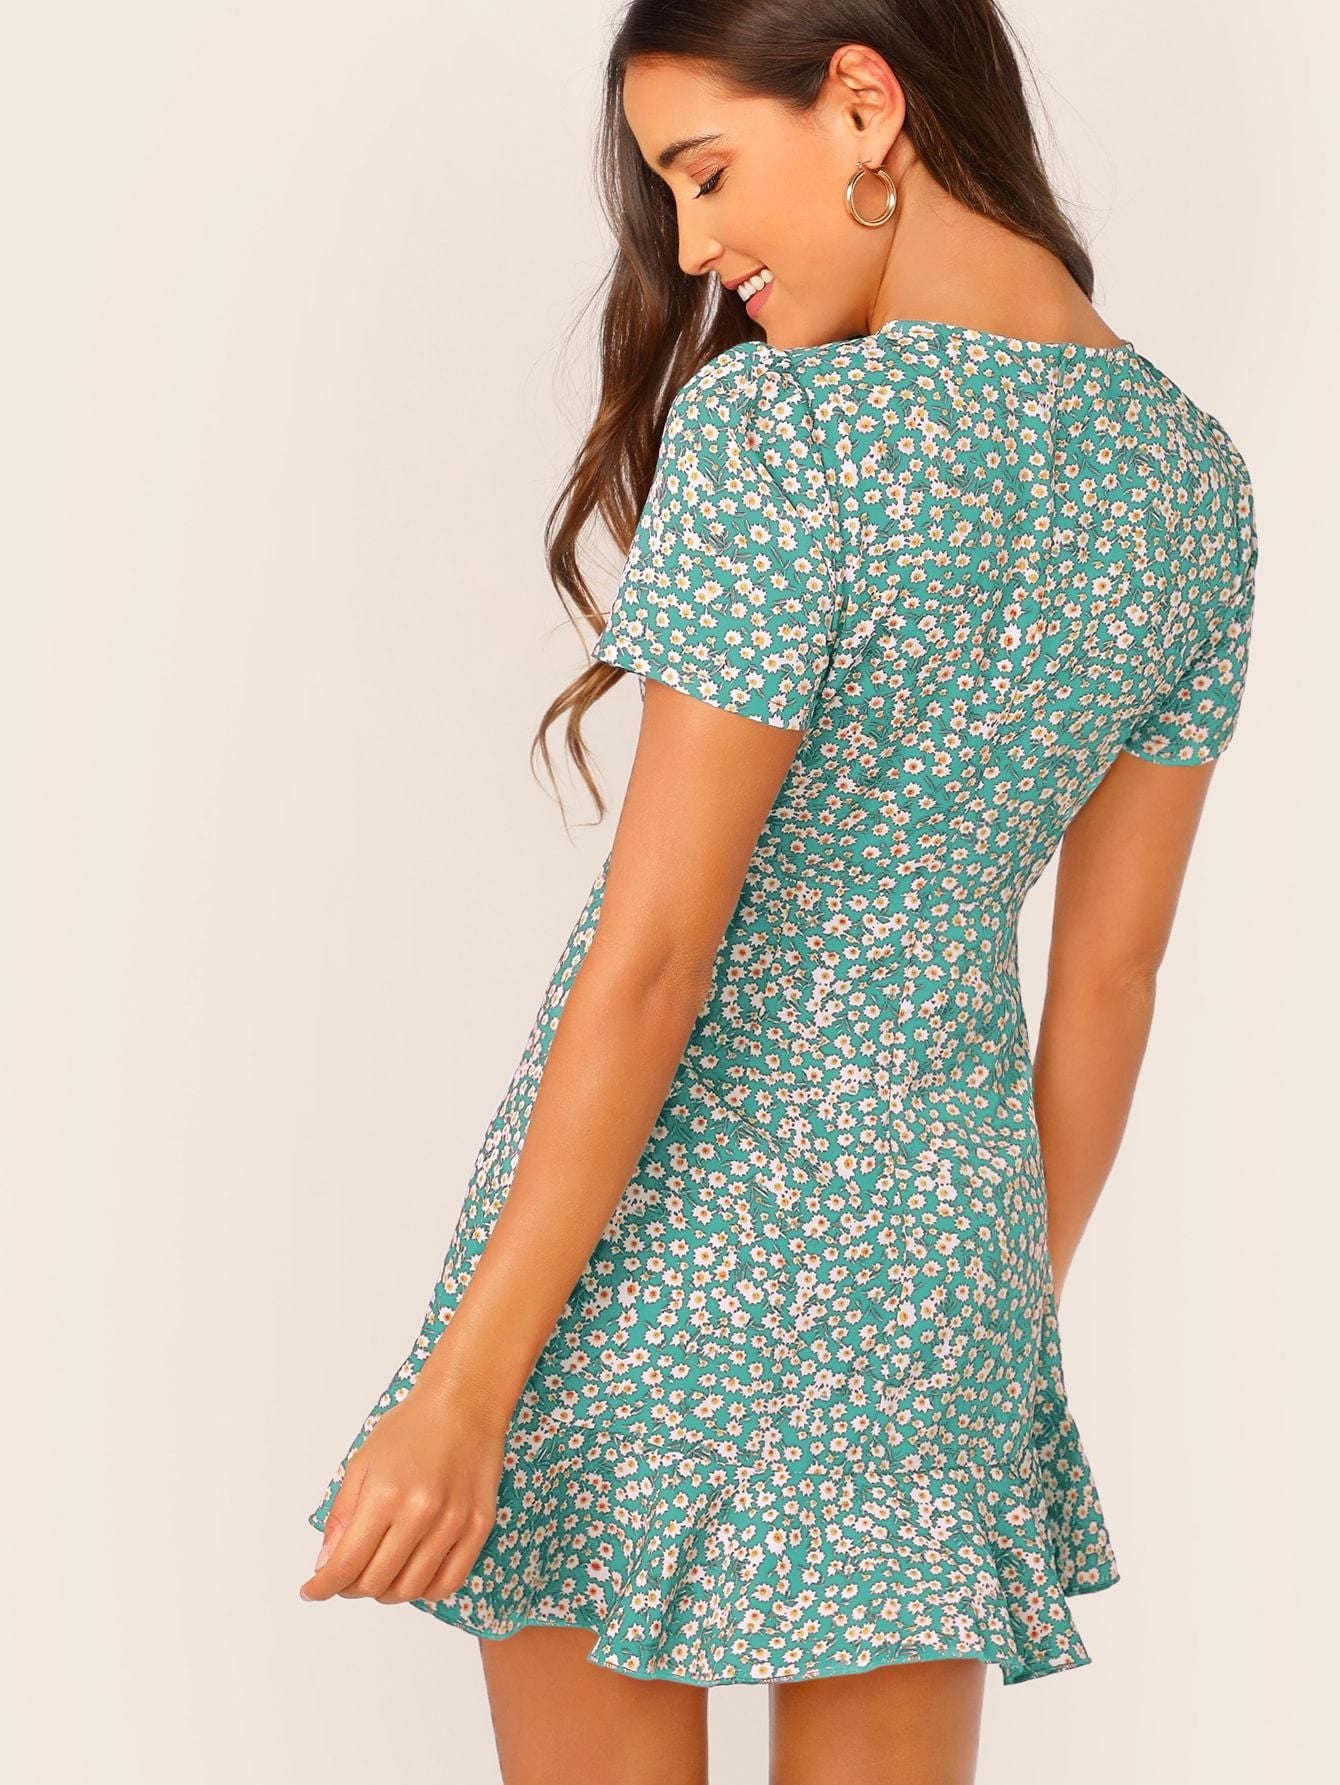 AAHWAN Women's Green Ditsy Floral Print Short Sleeves Mini Short Dress